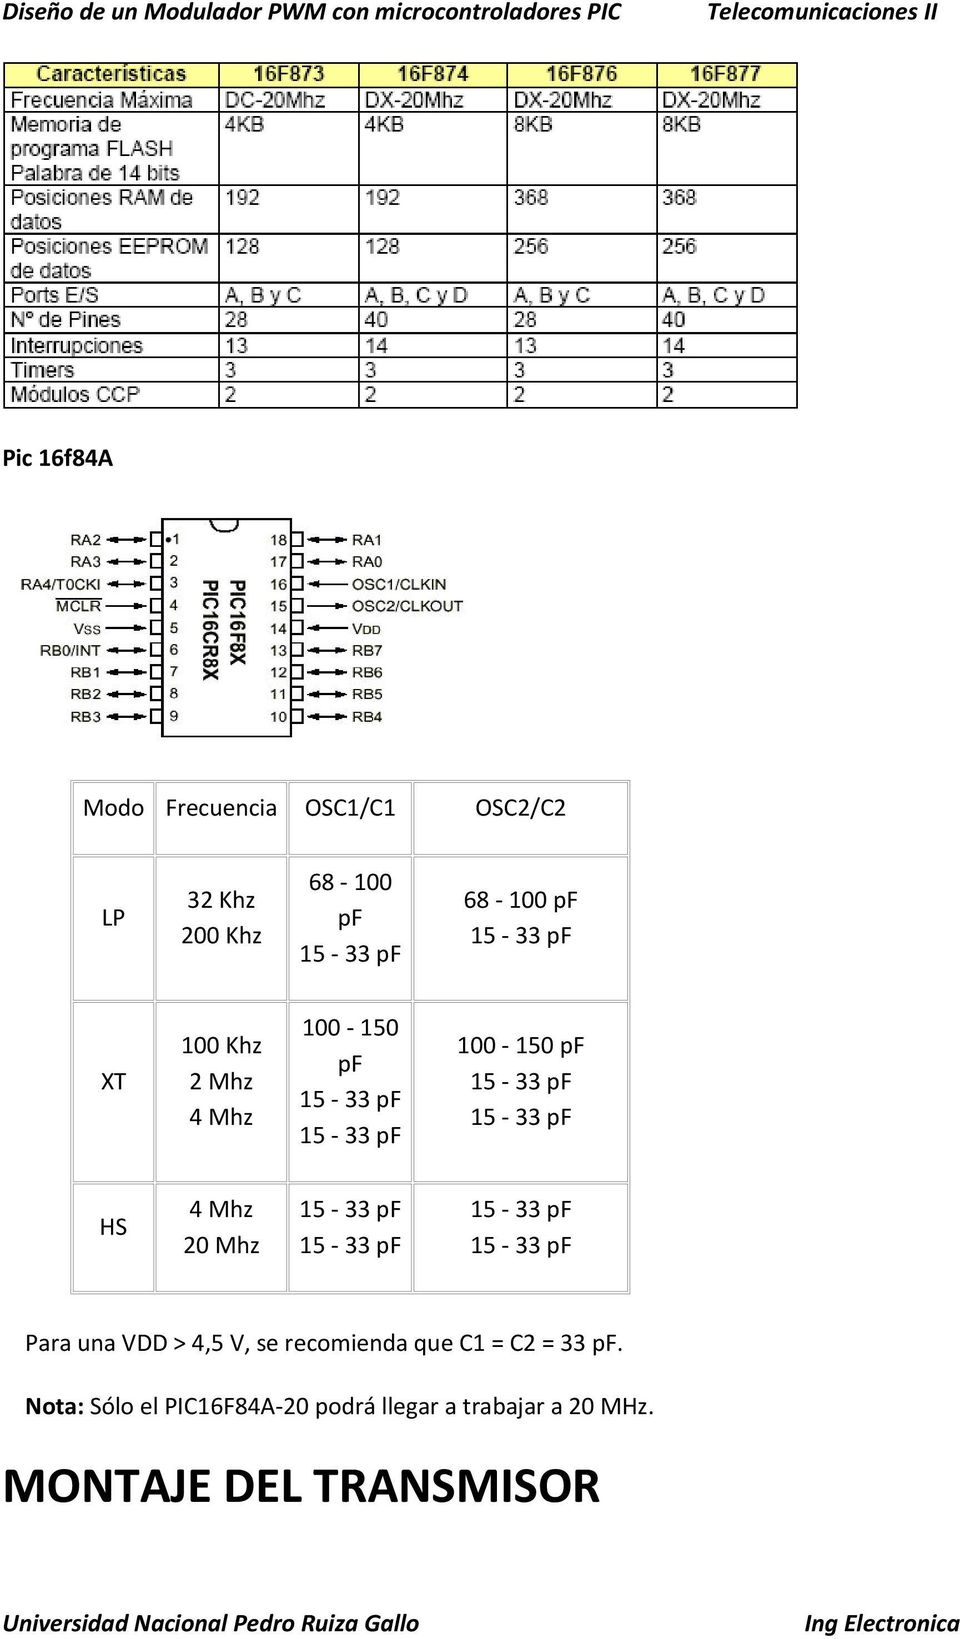 4 Mhz 20 Mhz 15-33 pf 15-33 pf 15-33 pf 15-33 pf Para una VDD > 4,5 V, se recomienda que C1